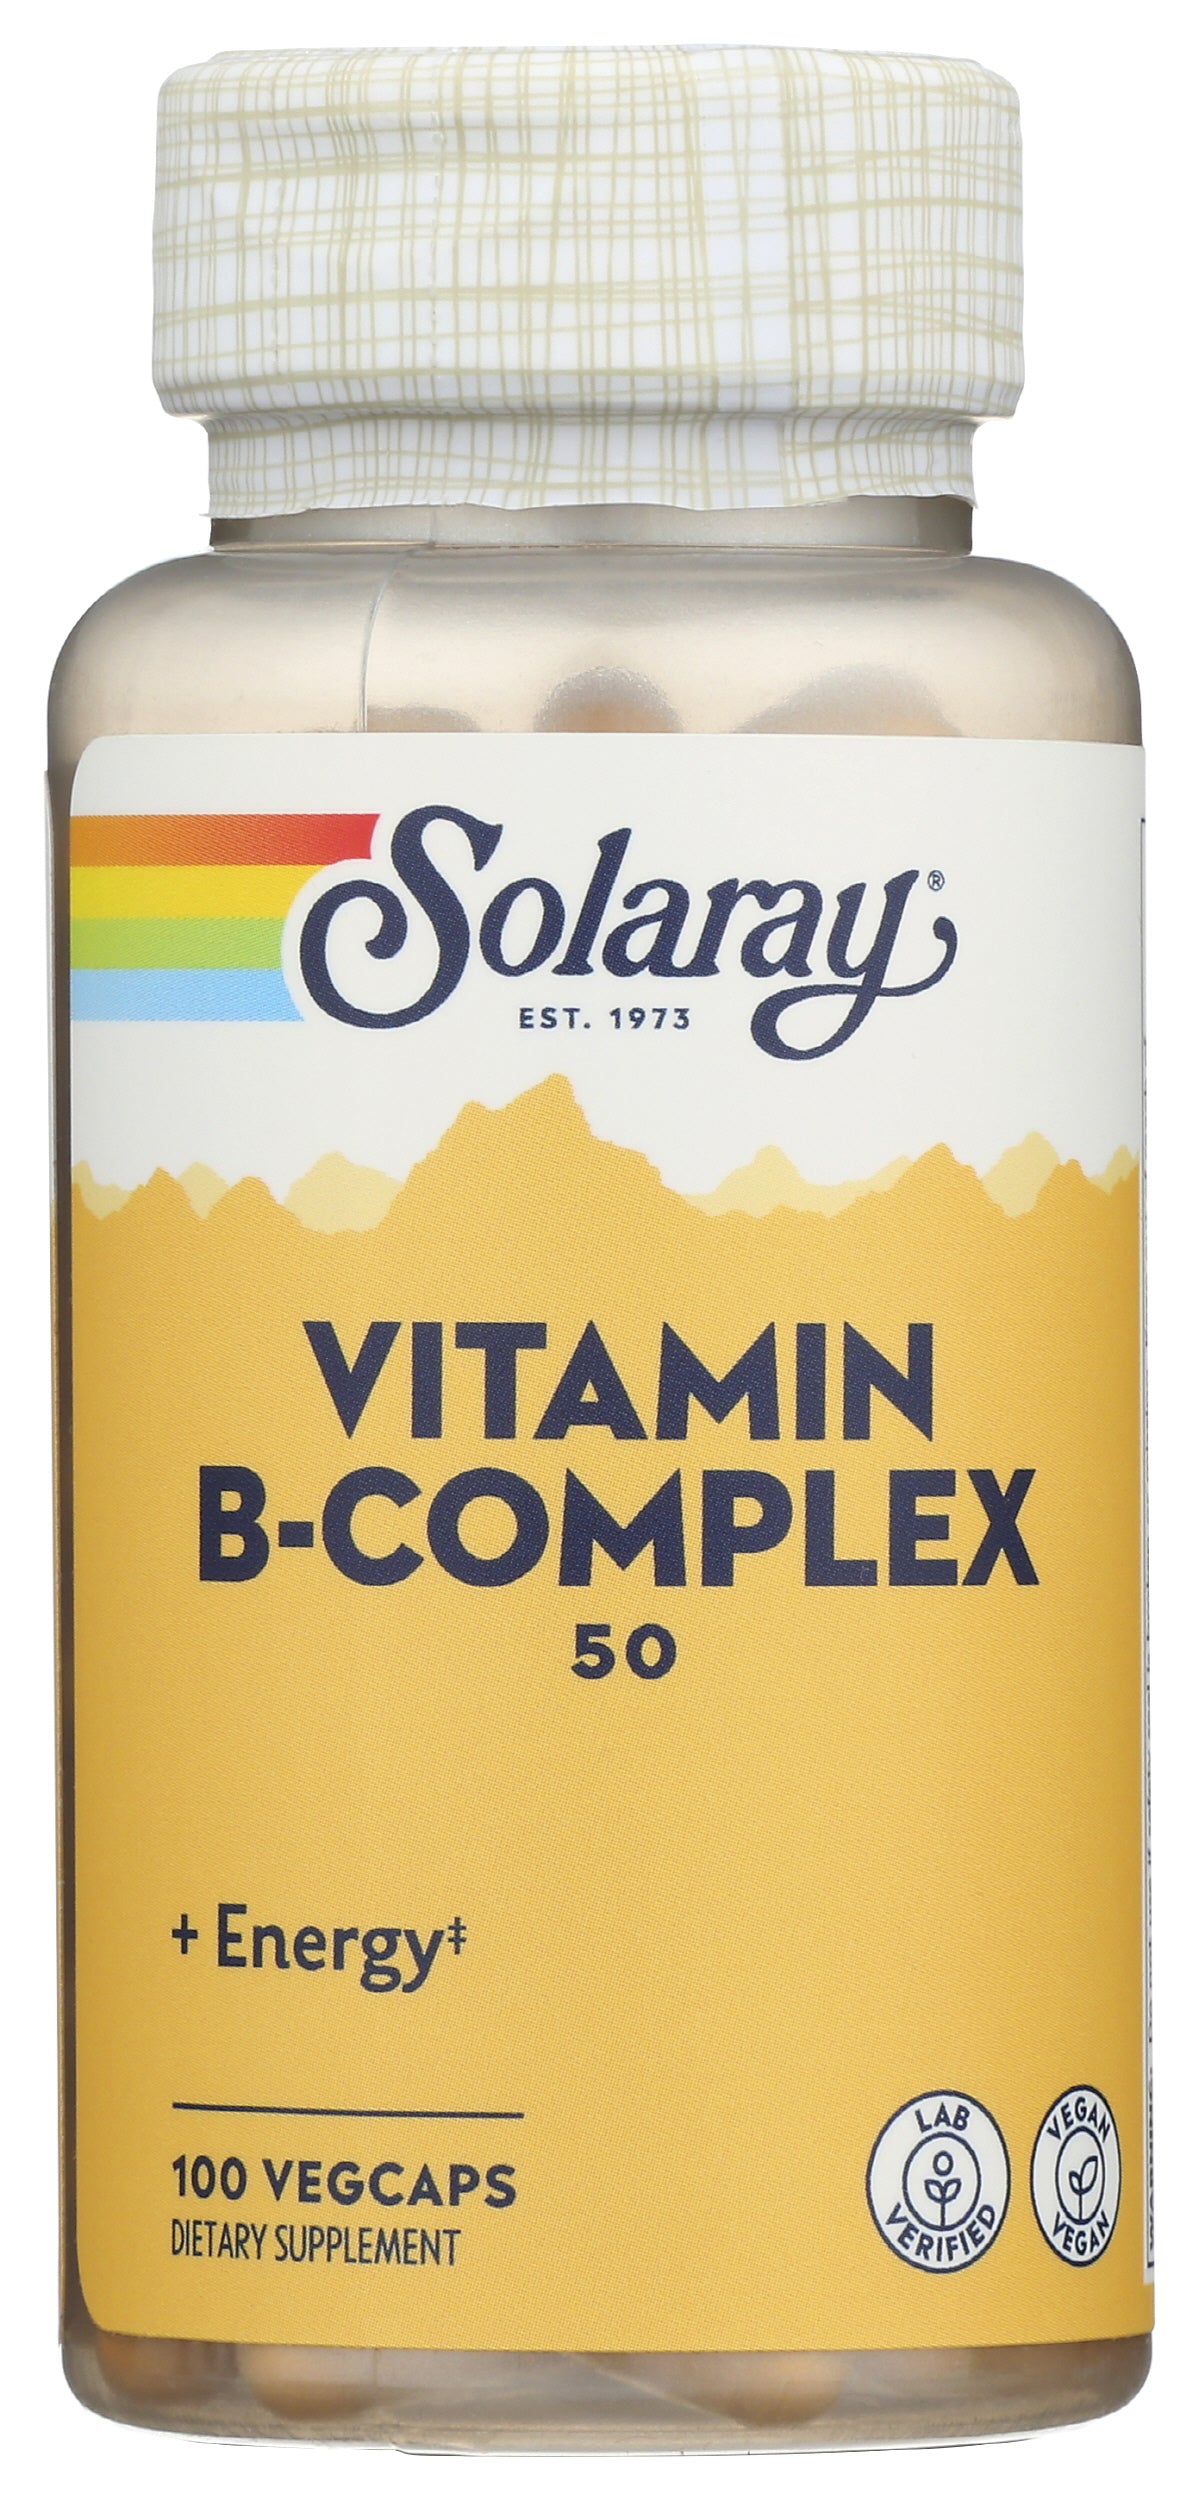 Solaray Vitamin B-Complex 50 100 VegCaps Front of Bottle